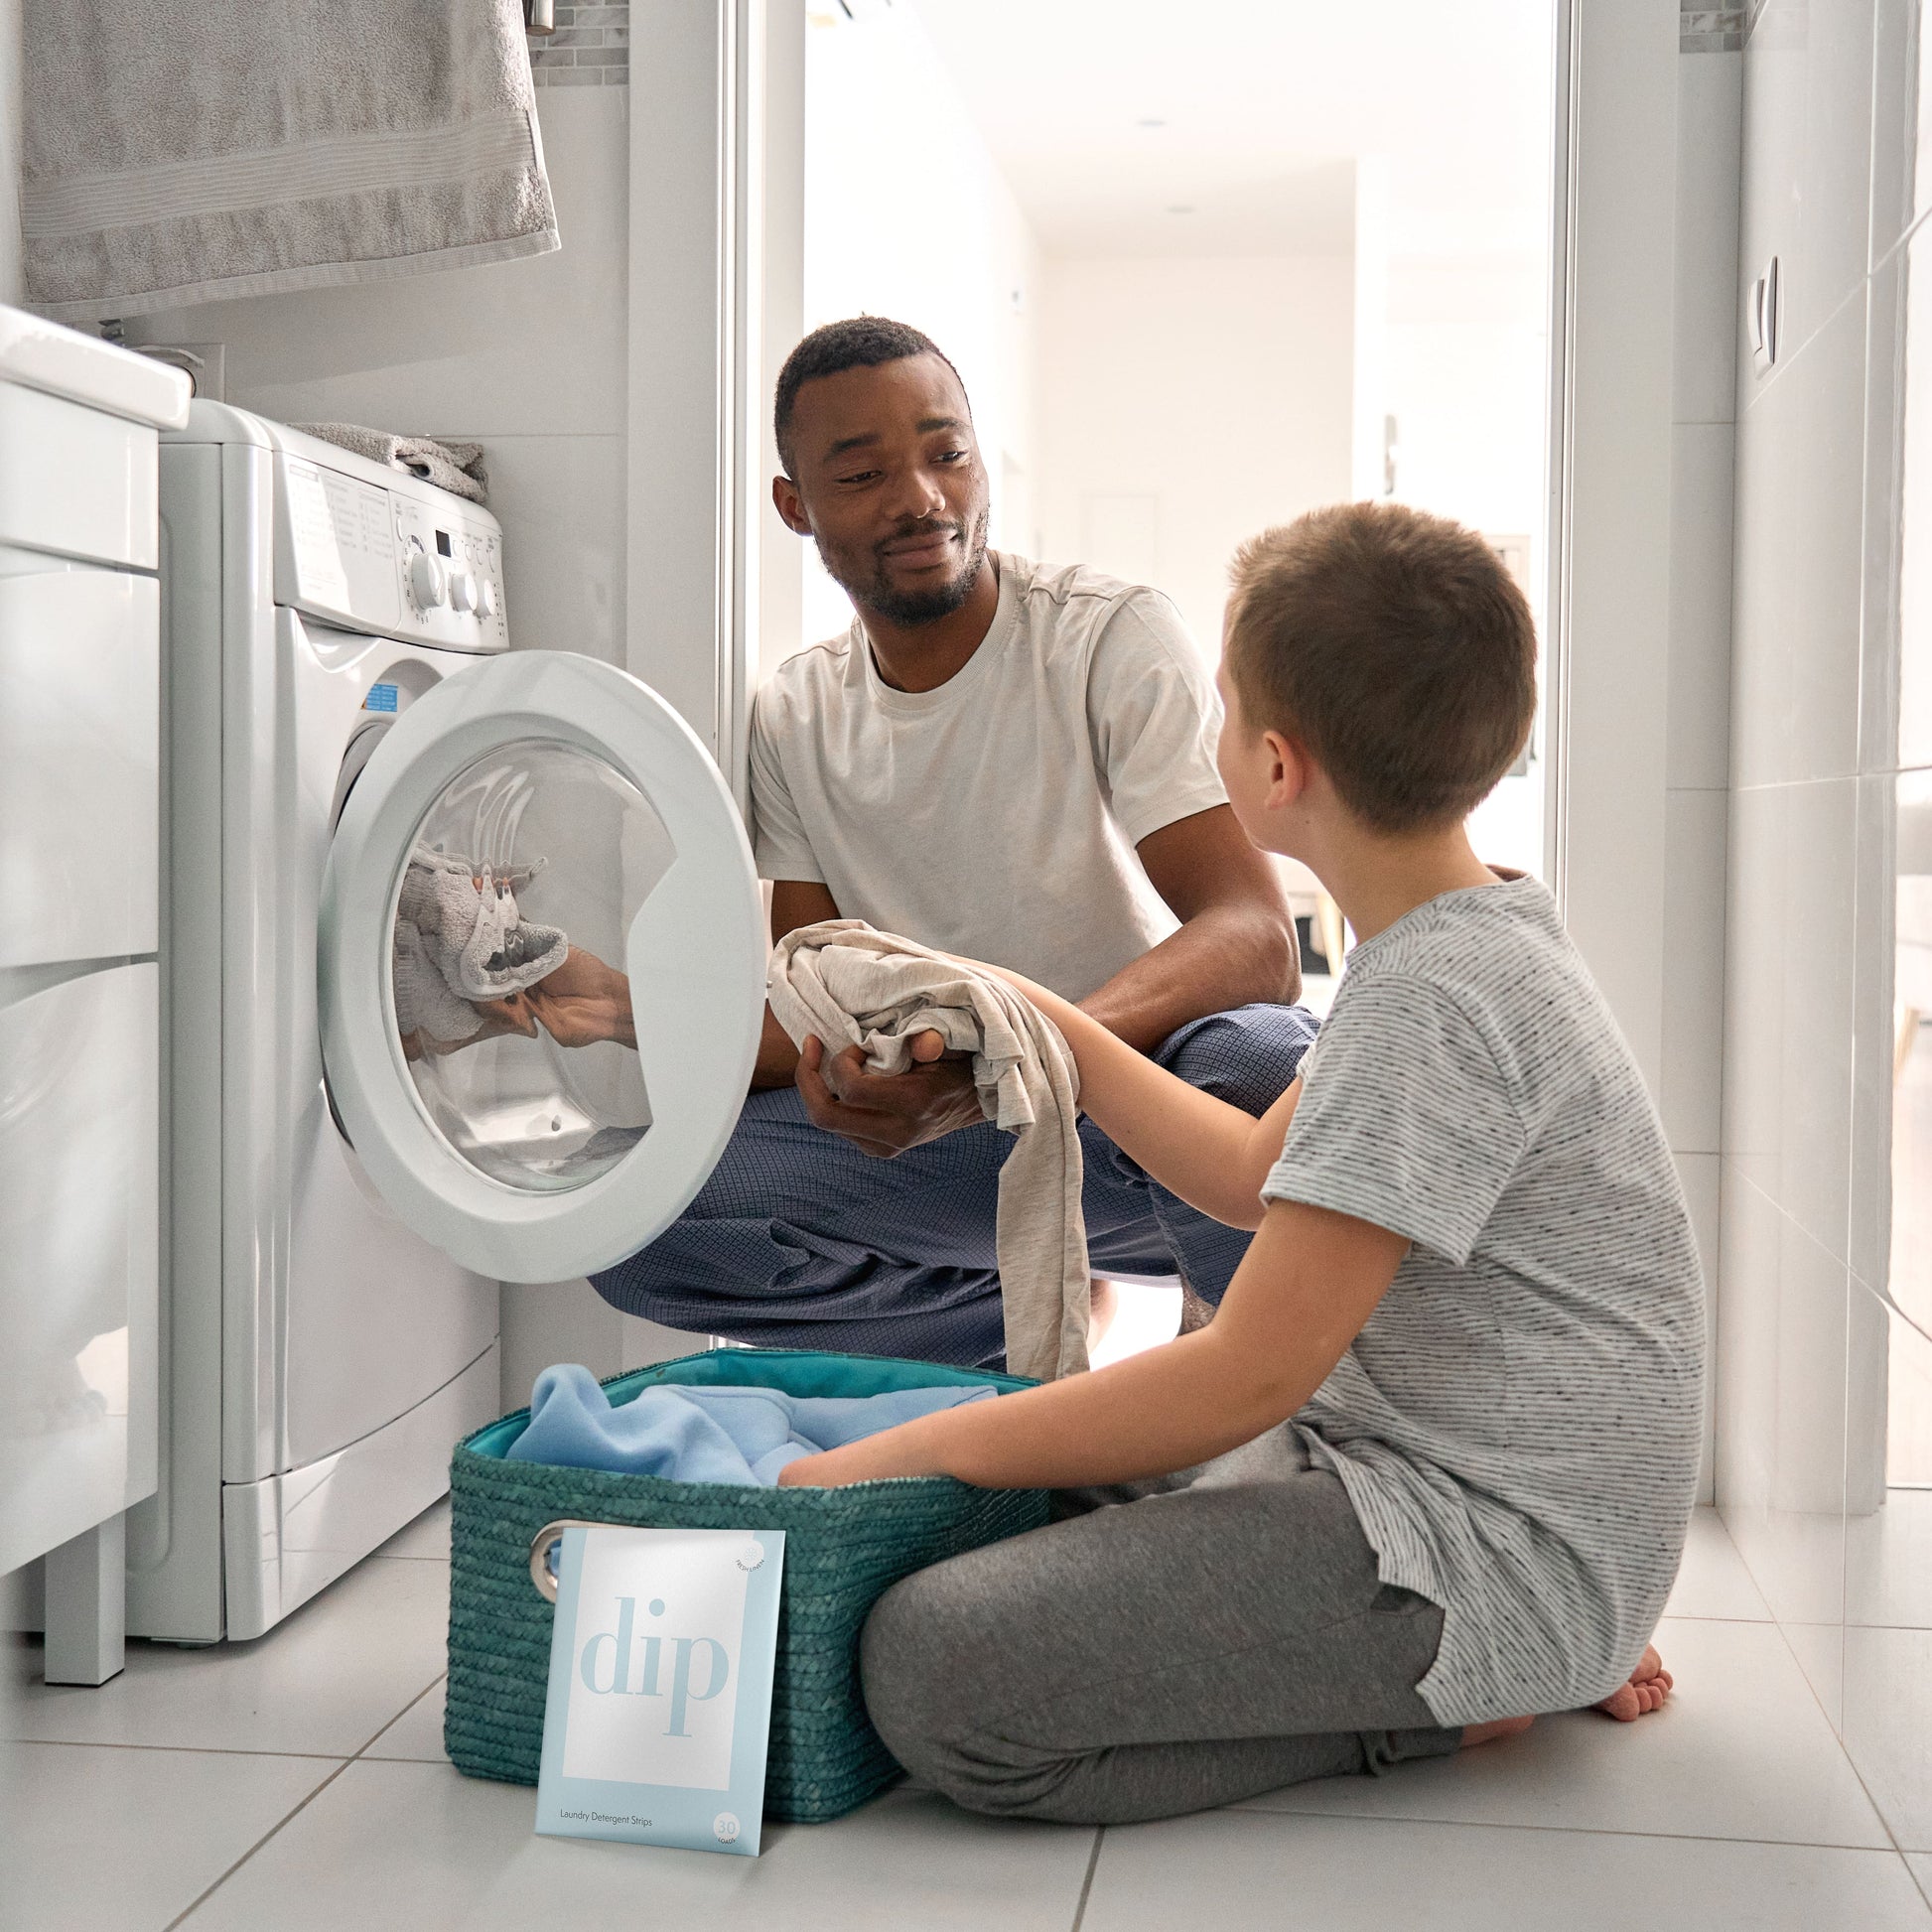 Dip  Laundry Detergent Sheets – wearedipuk